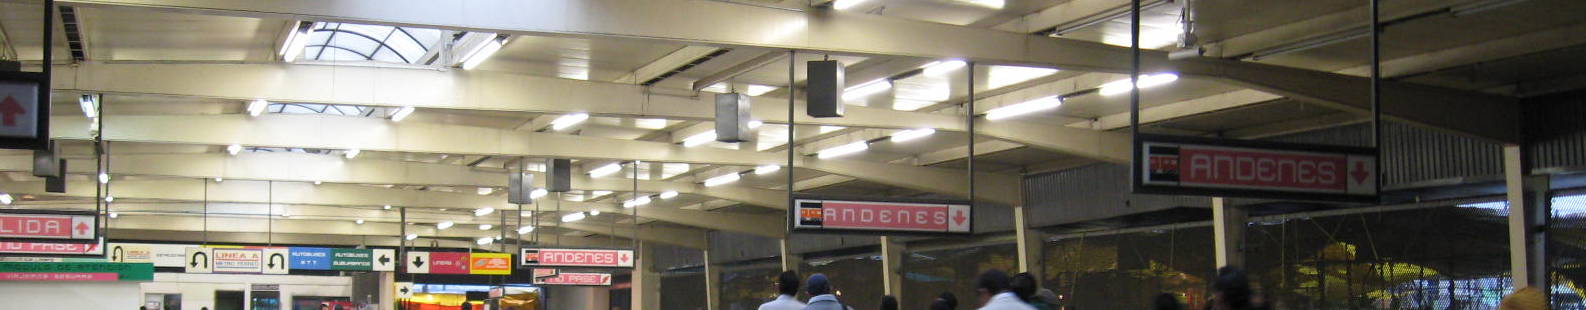 Metro Pantitlán